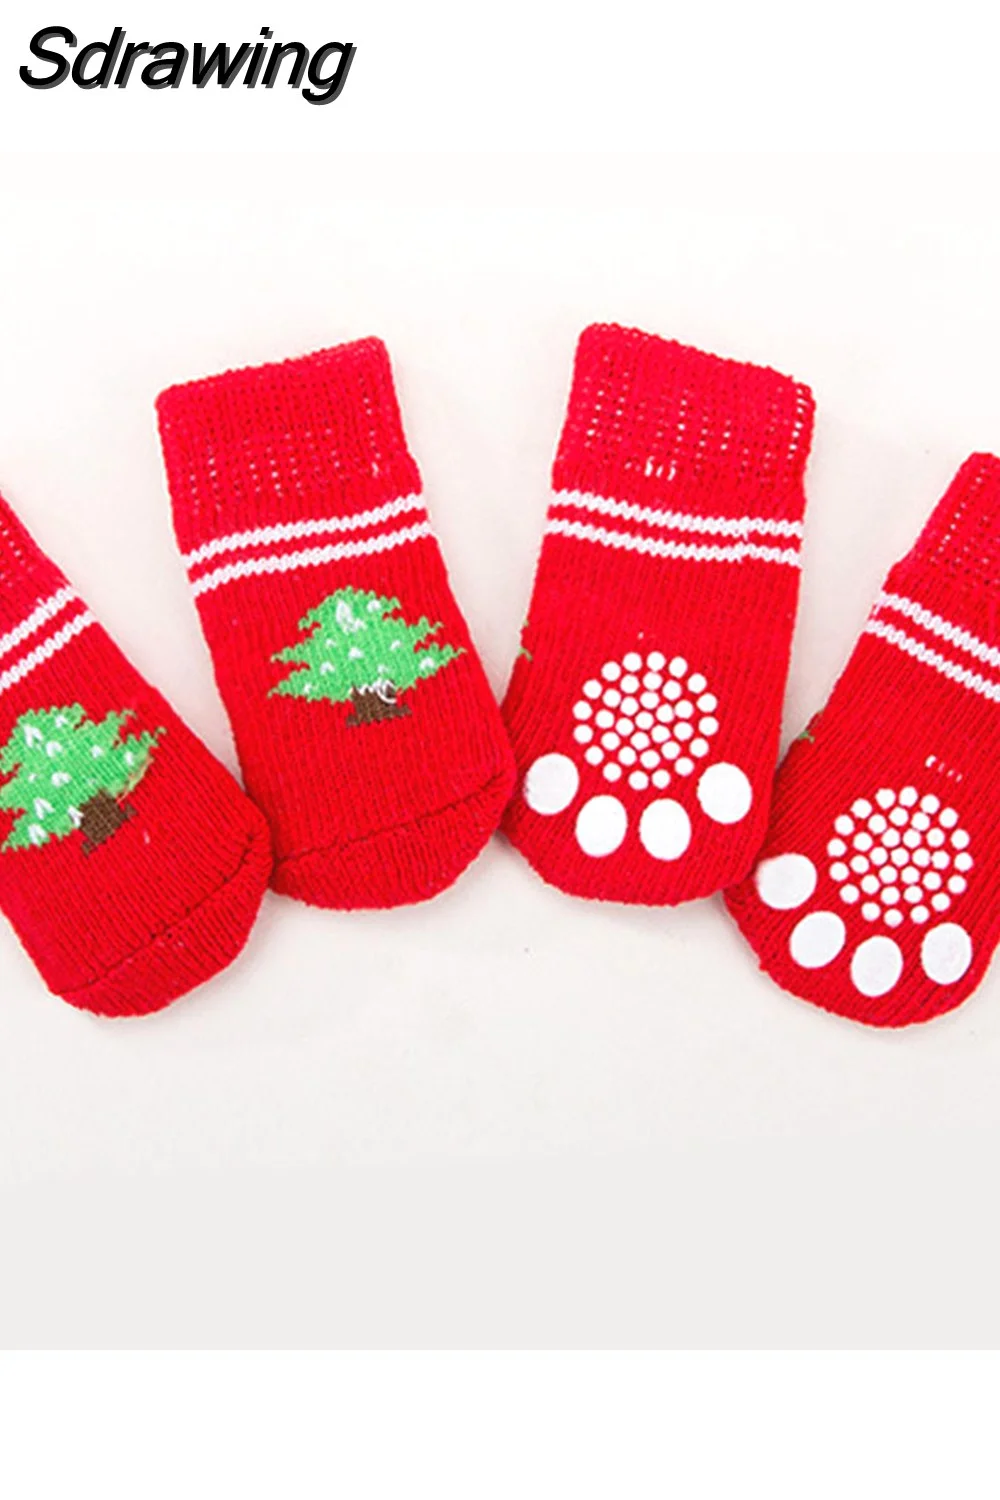 Sdrawing Cute Puppy Dog Socks Cartoon Printed Anti Slip Knit Socks Winter Warm Puppy Shoes Small Medium Dogs Boots Pet Products